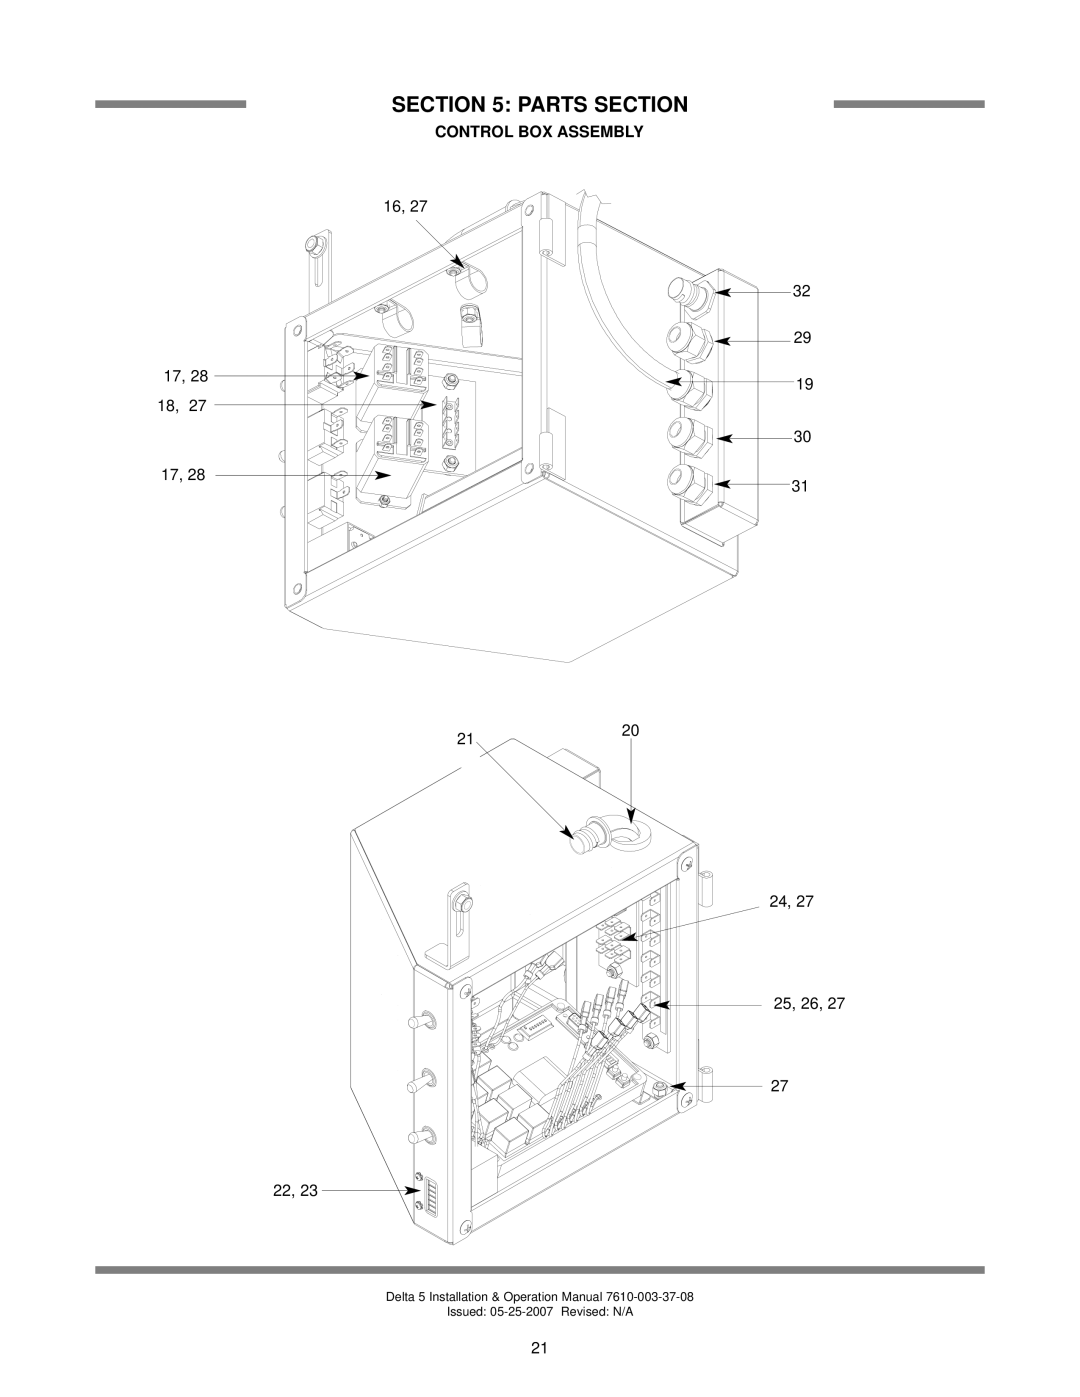 Jackson DELTA 5 D, Delta 5 technical manual Parts Section, Control Box Assembly, 2120 